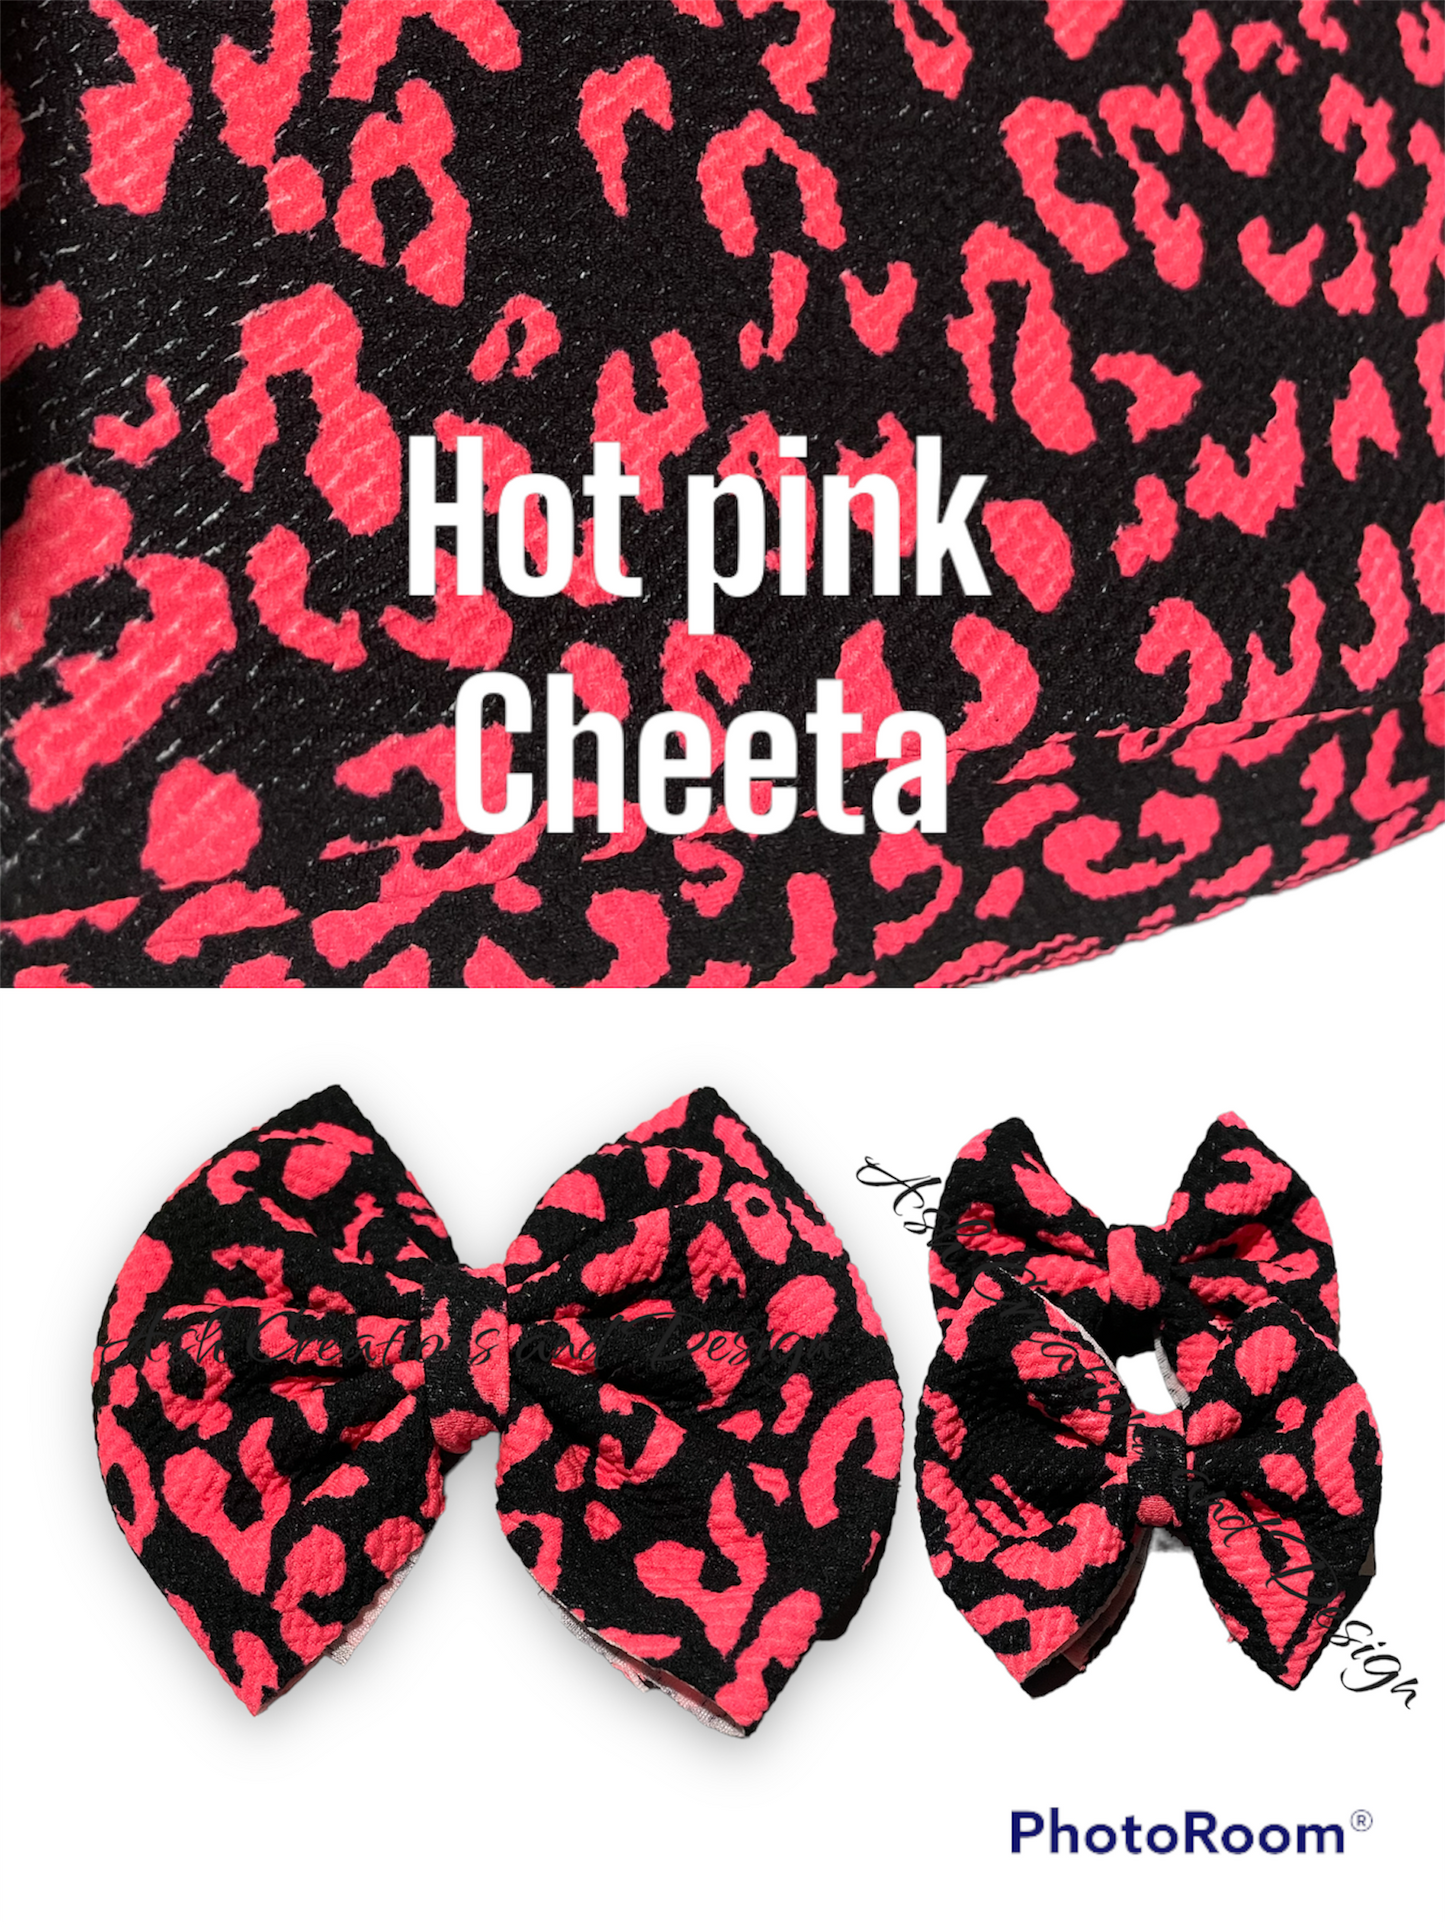 Hot pink Cheeta